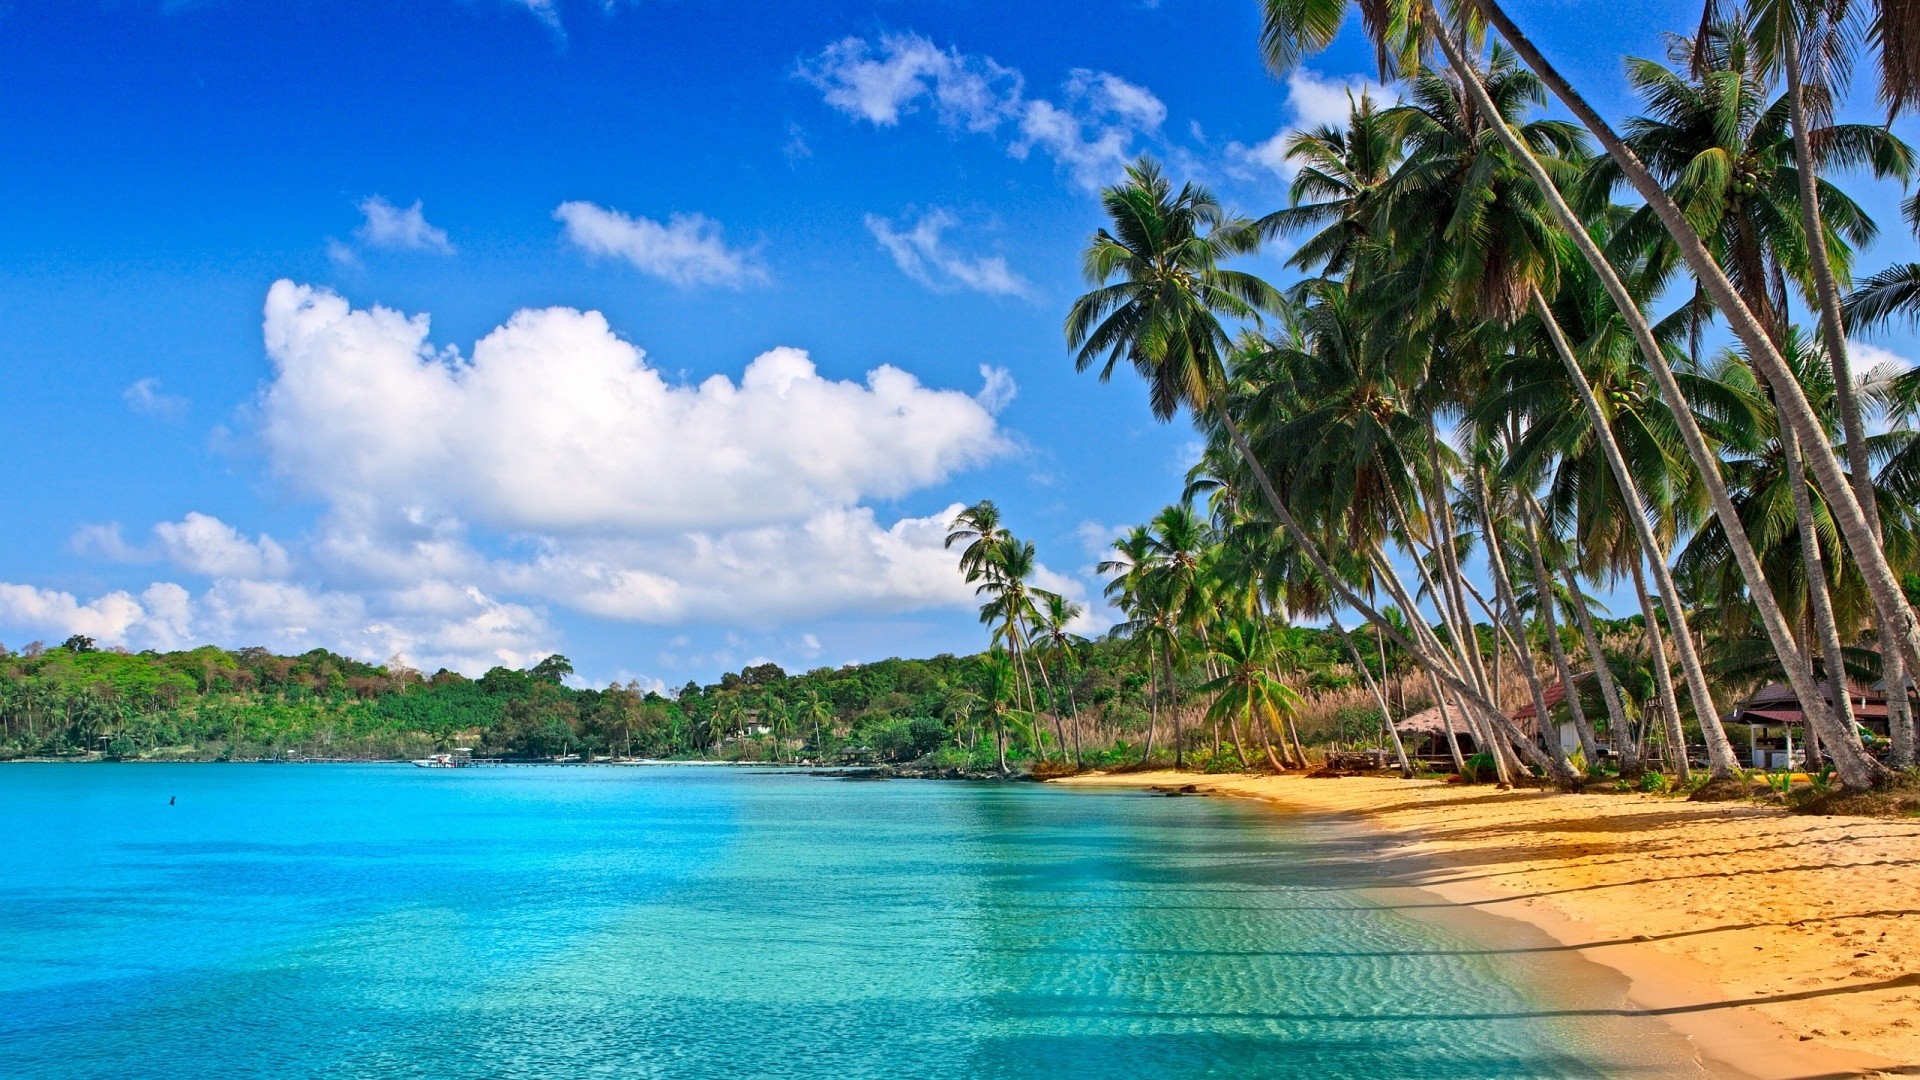 Tropical Beach Desktop Background